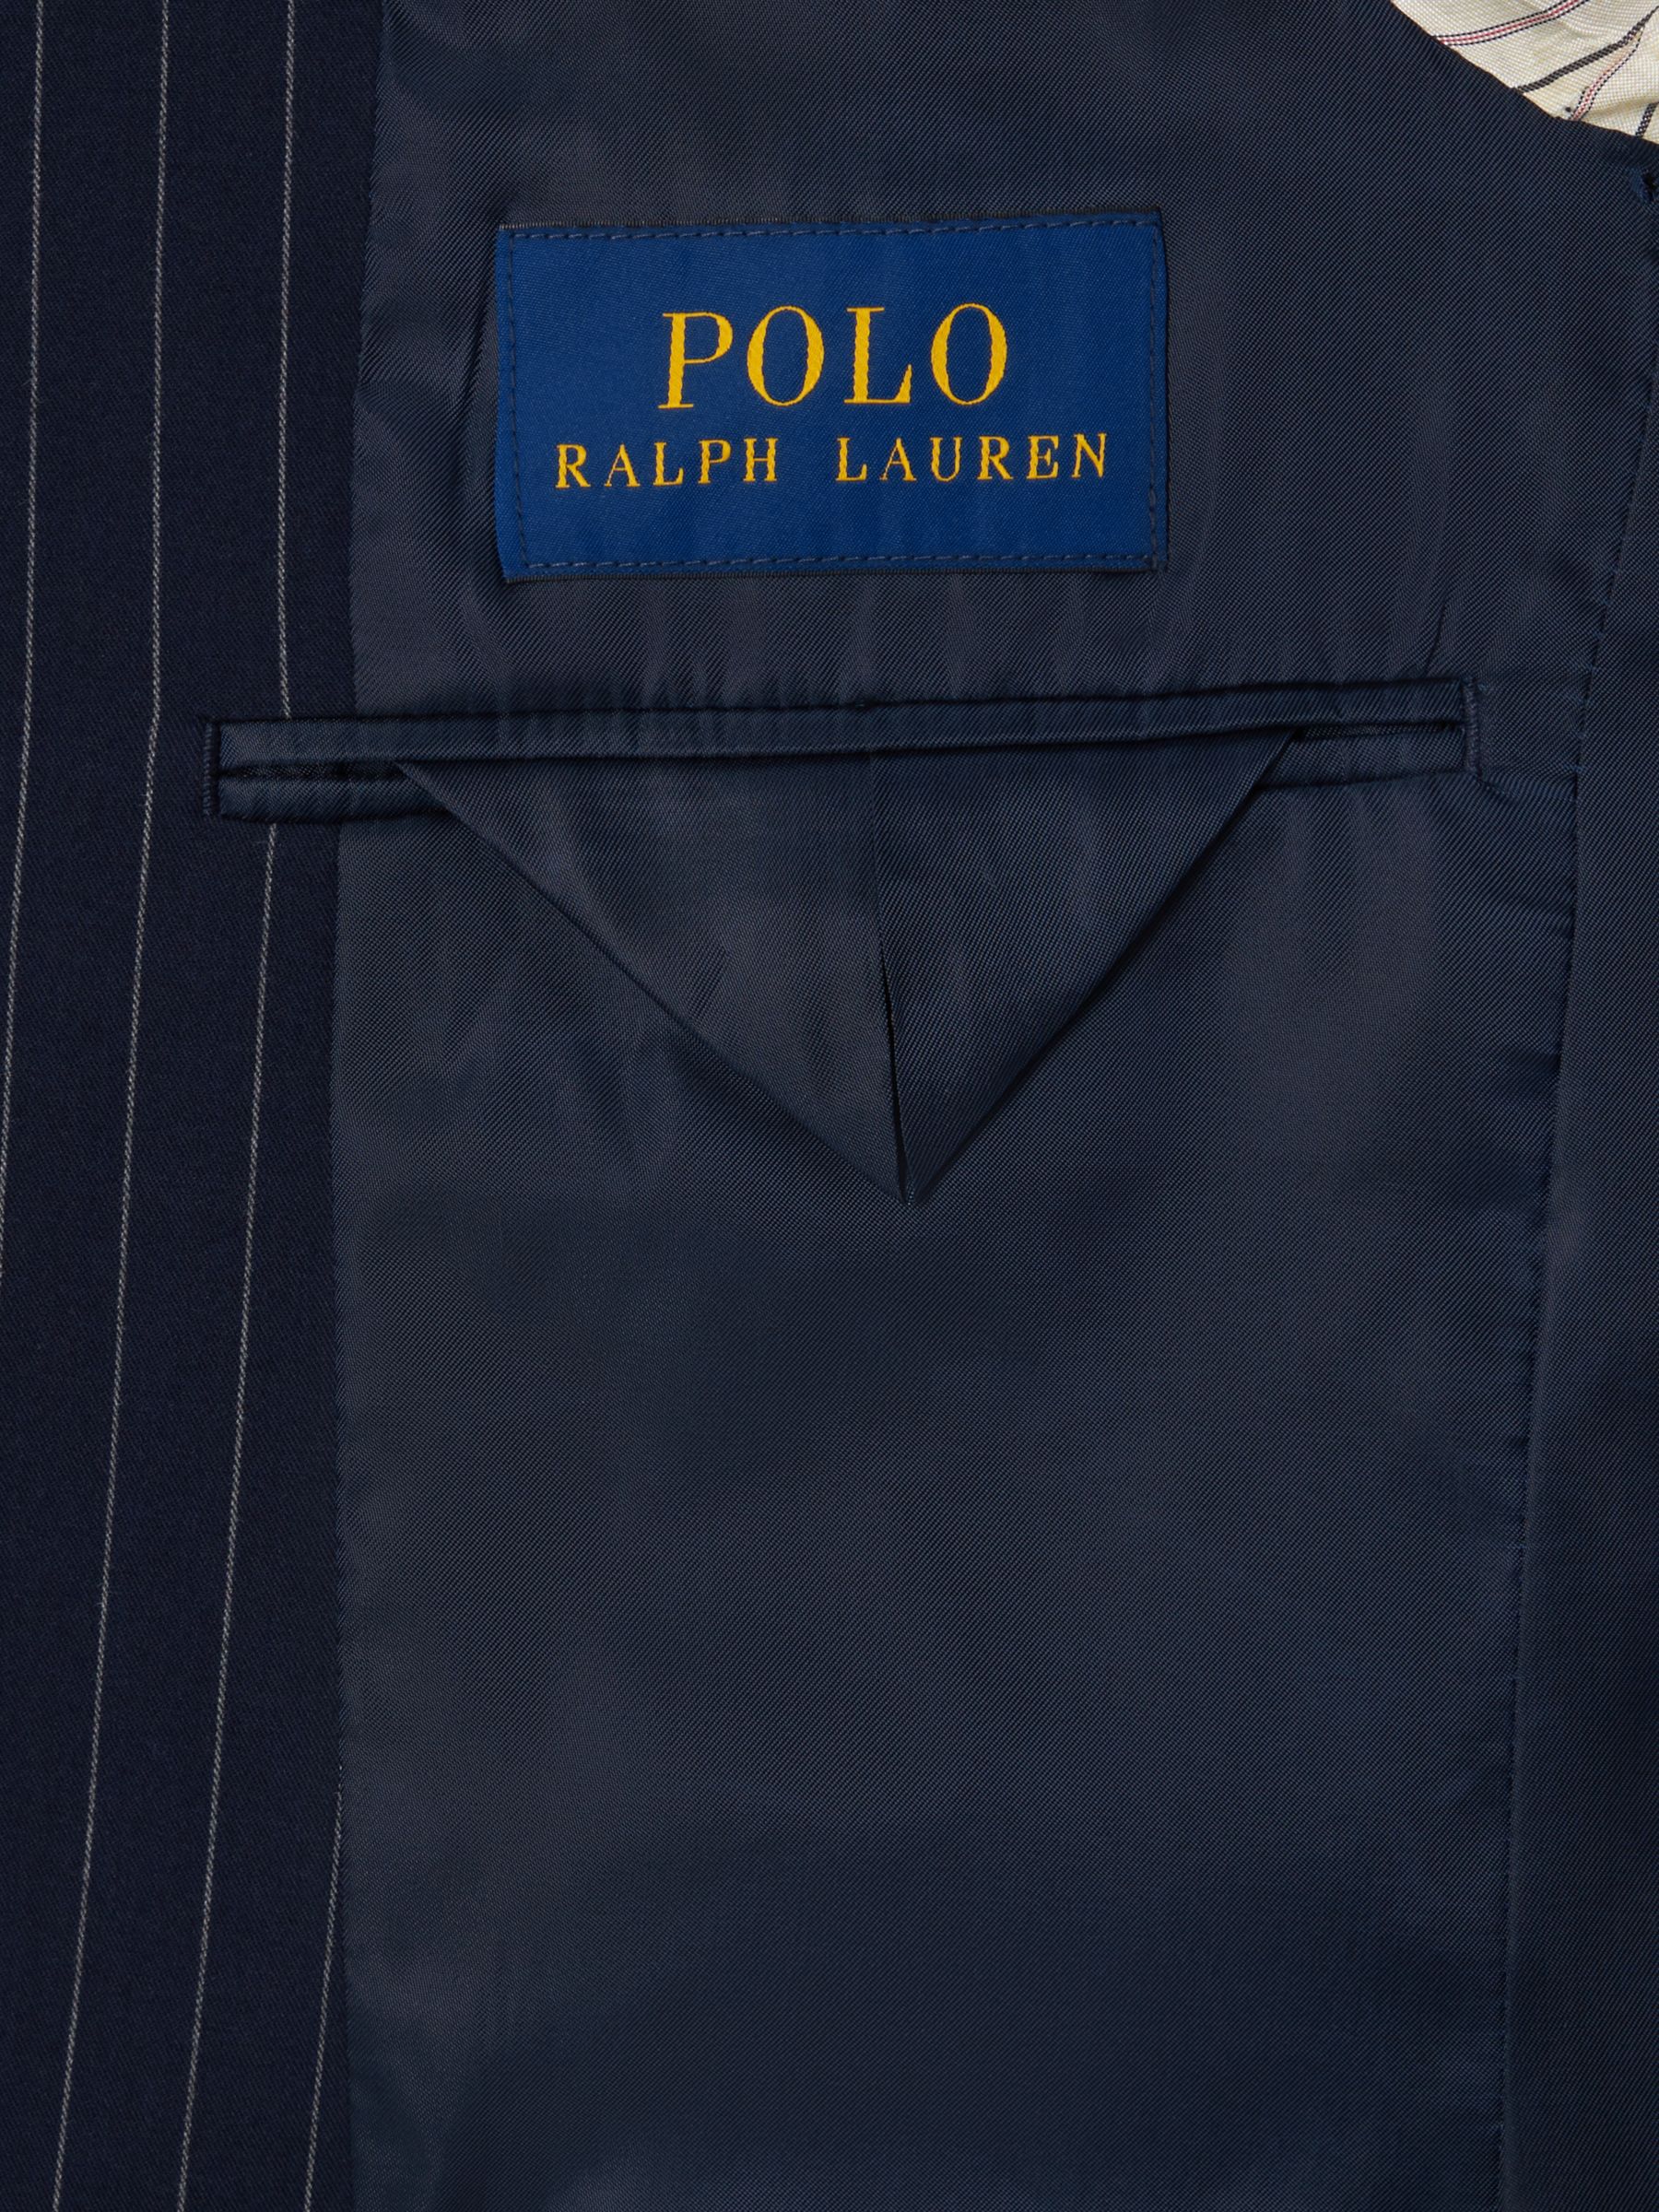 Polo Ralph Lauren Polo Modern Rope Stripe Suit Jacket, Navy, 38R